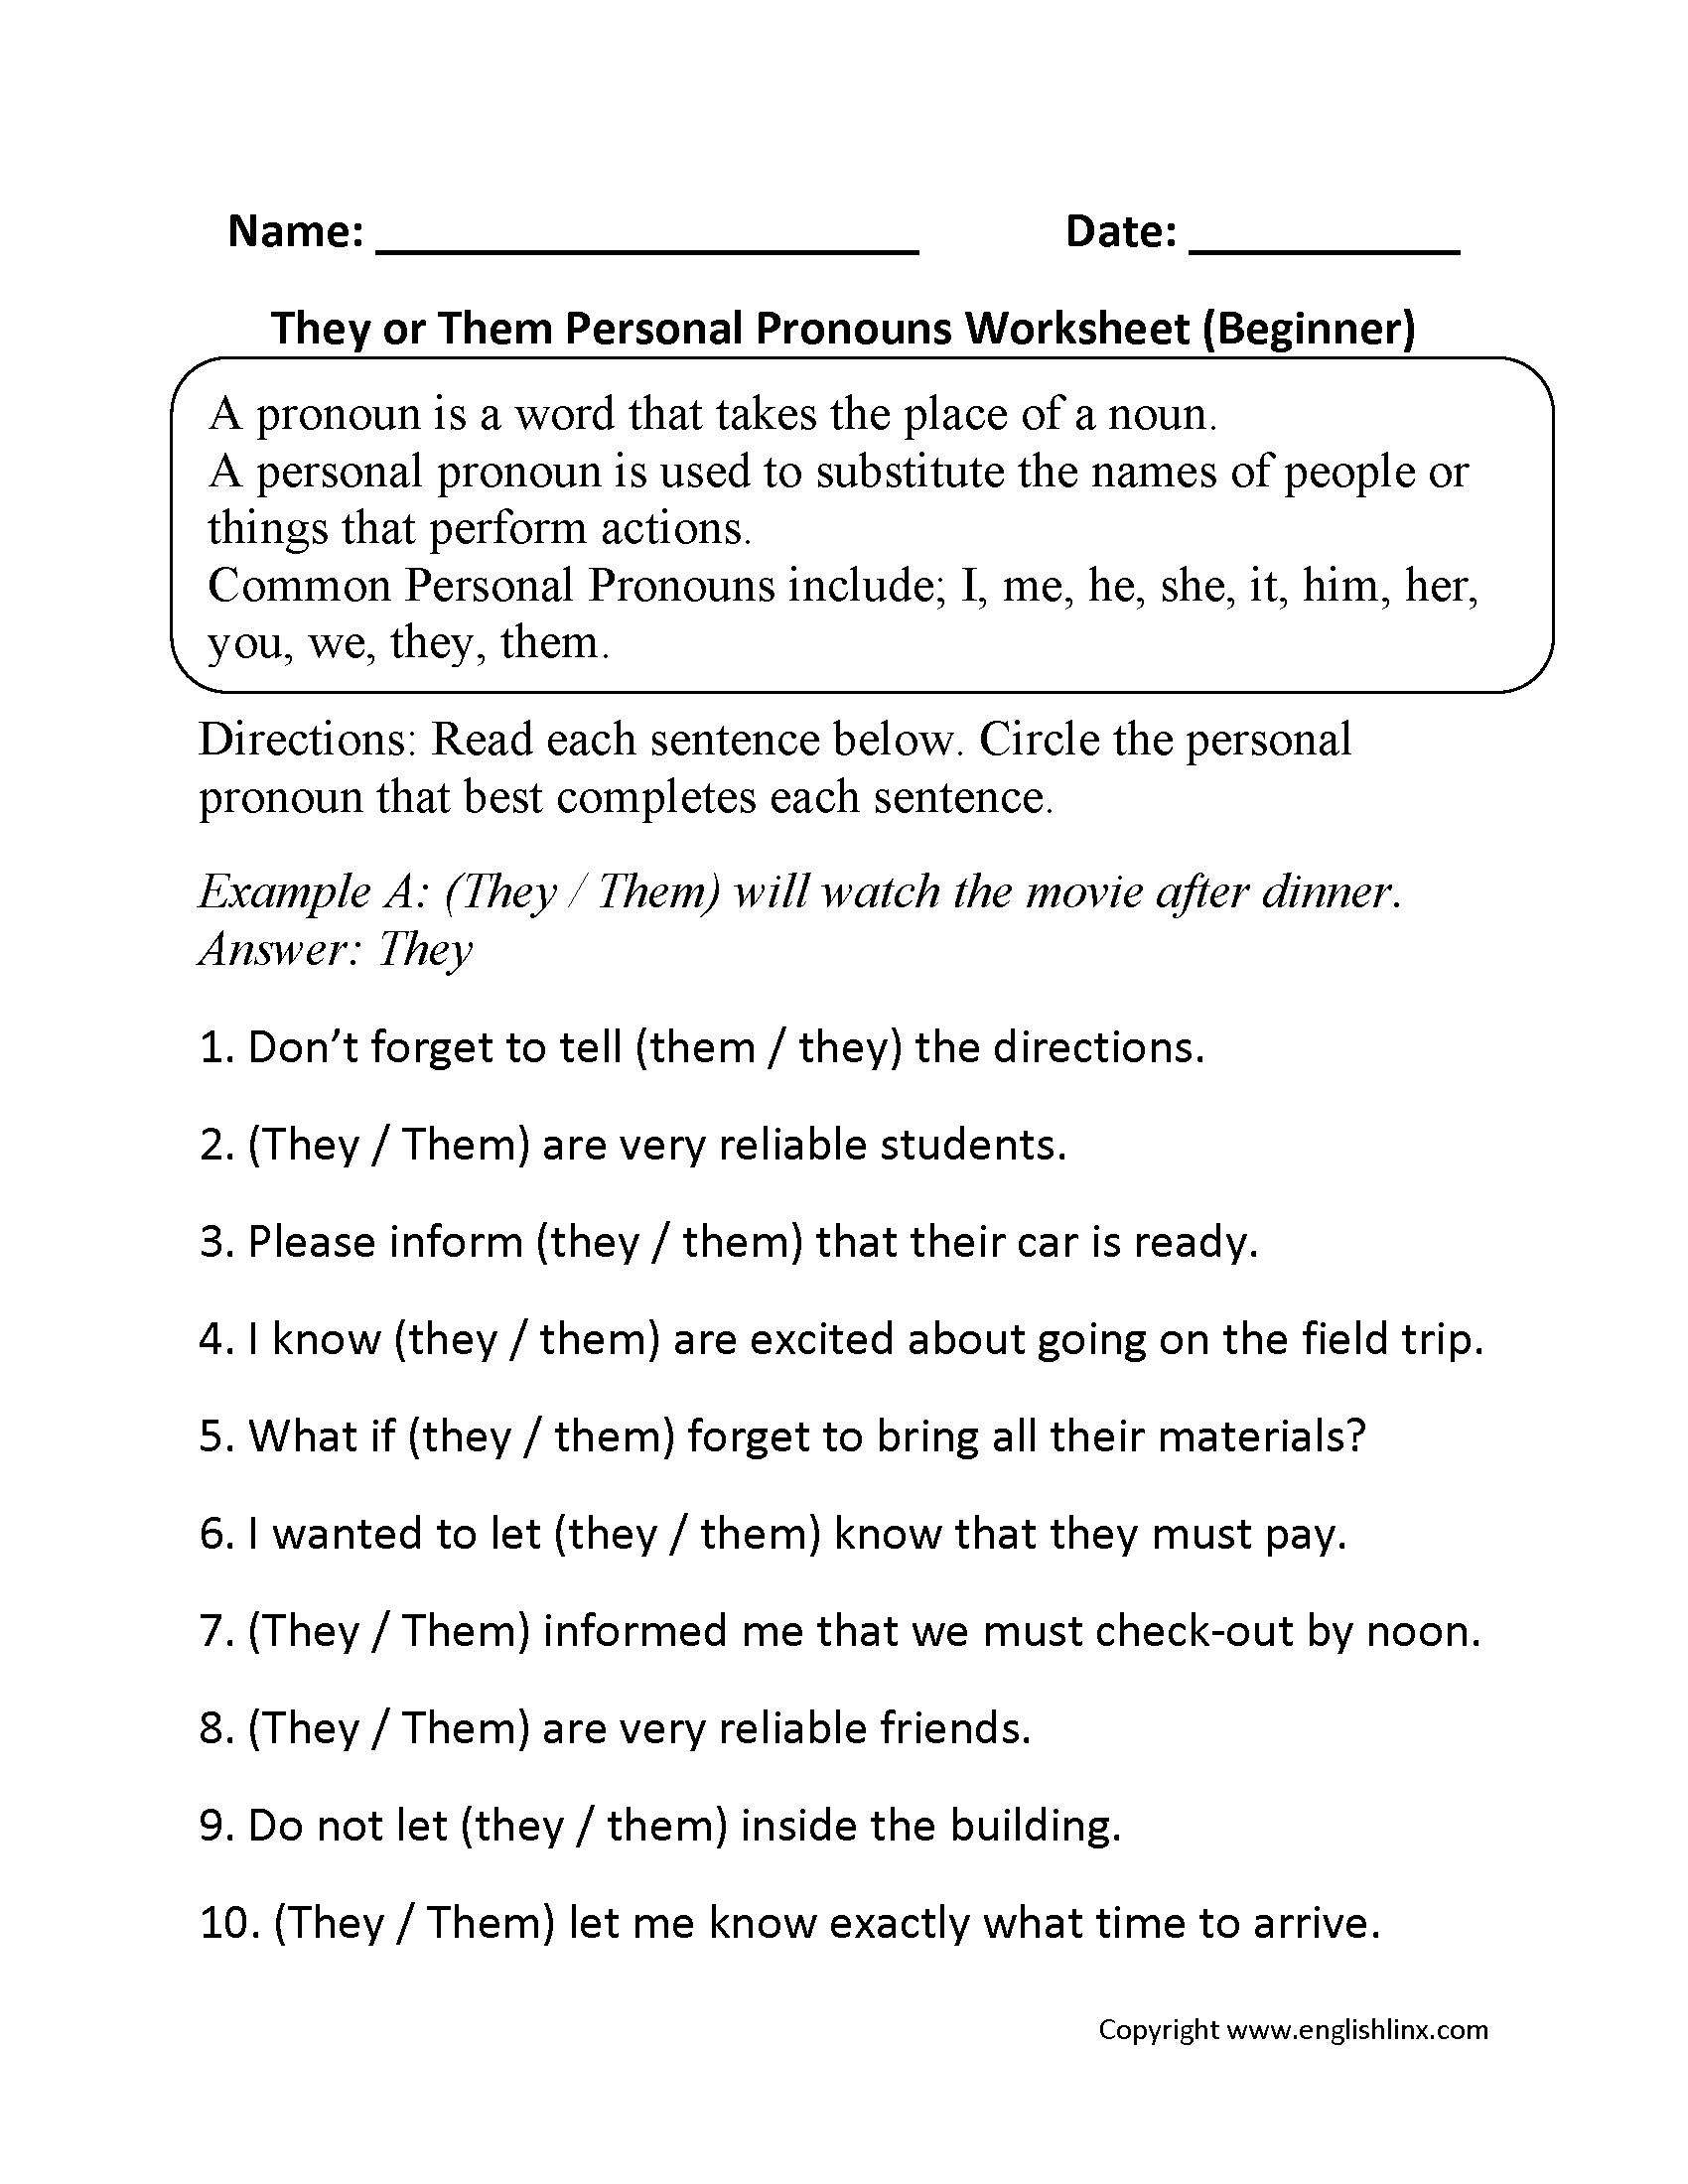 pronouns-worksheets-personal-pronouns-worksheets